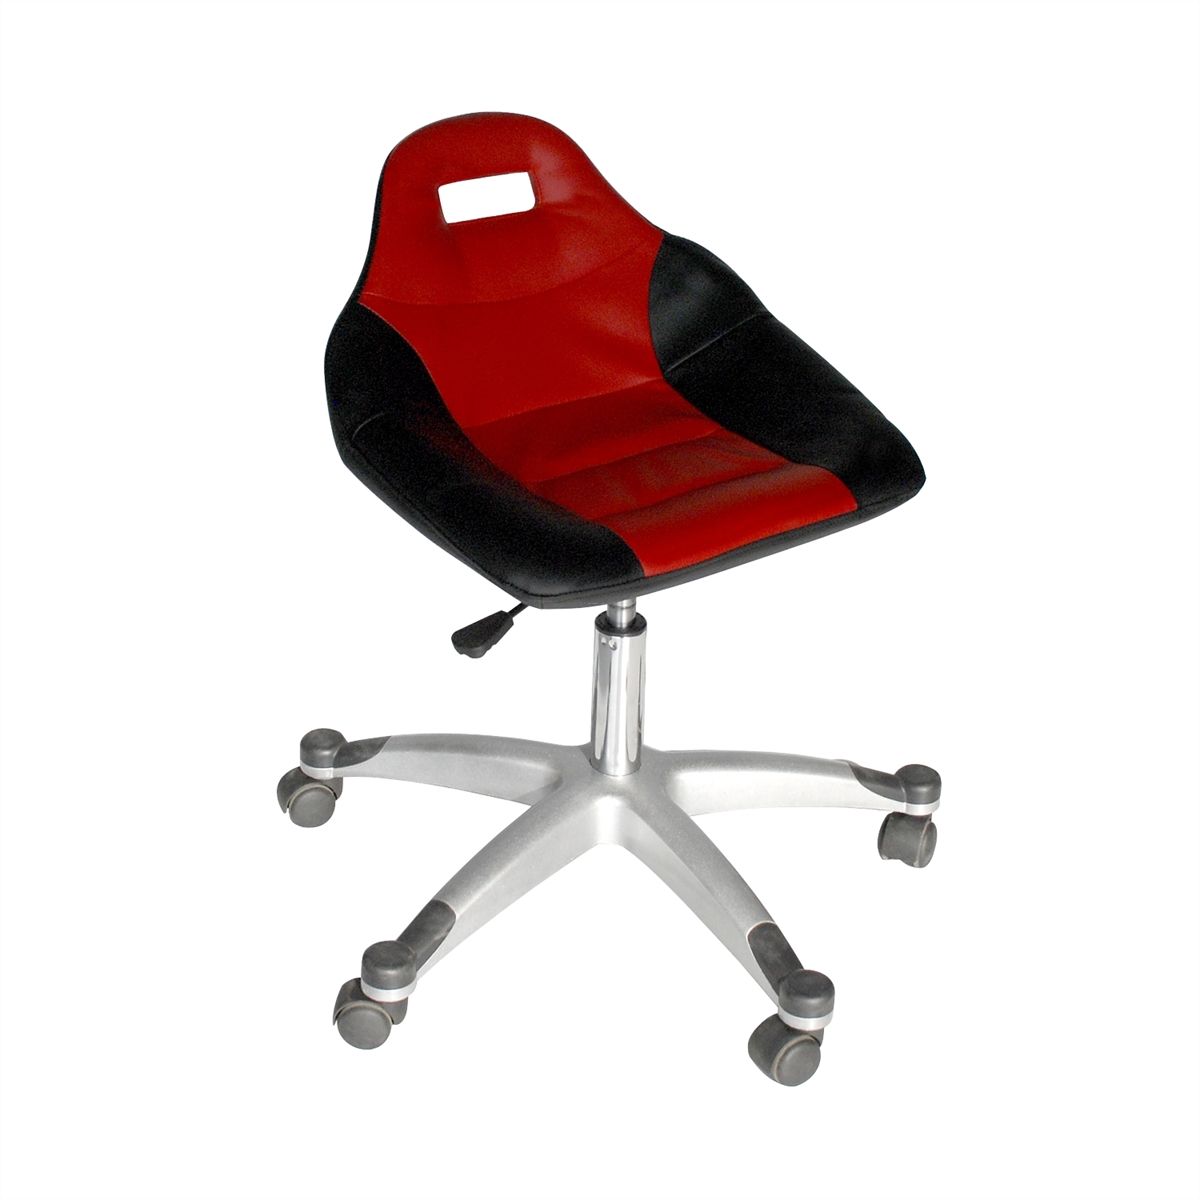 Sunex 8509 Pneumatic Seat for sale online 